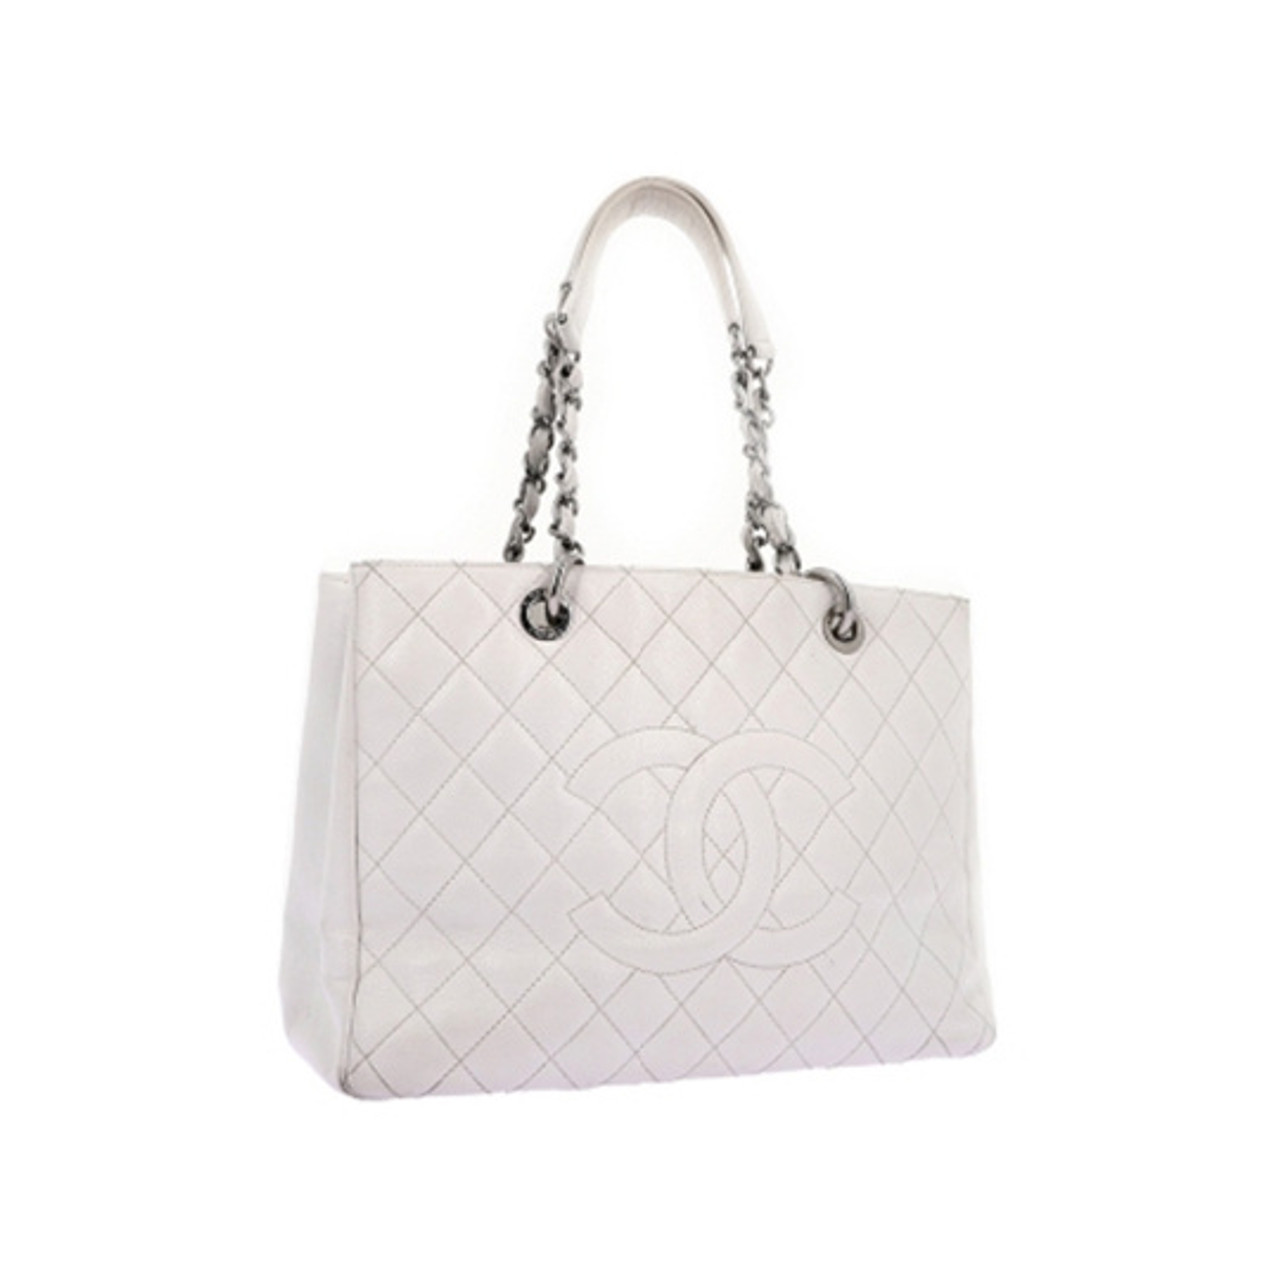 Chanel GST BAG | Chanel gst, Bags, Chanel